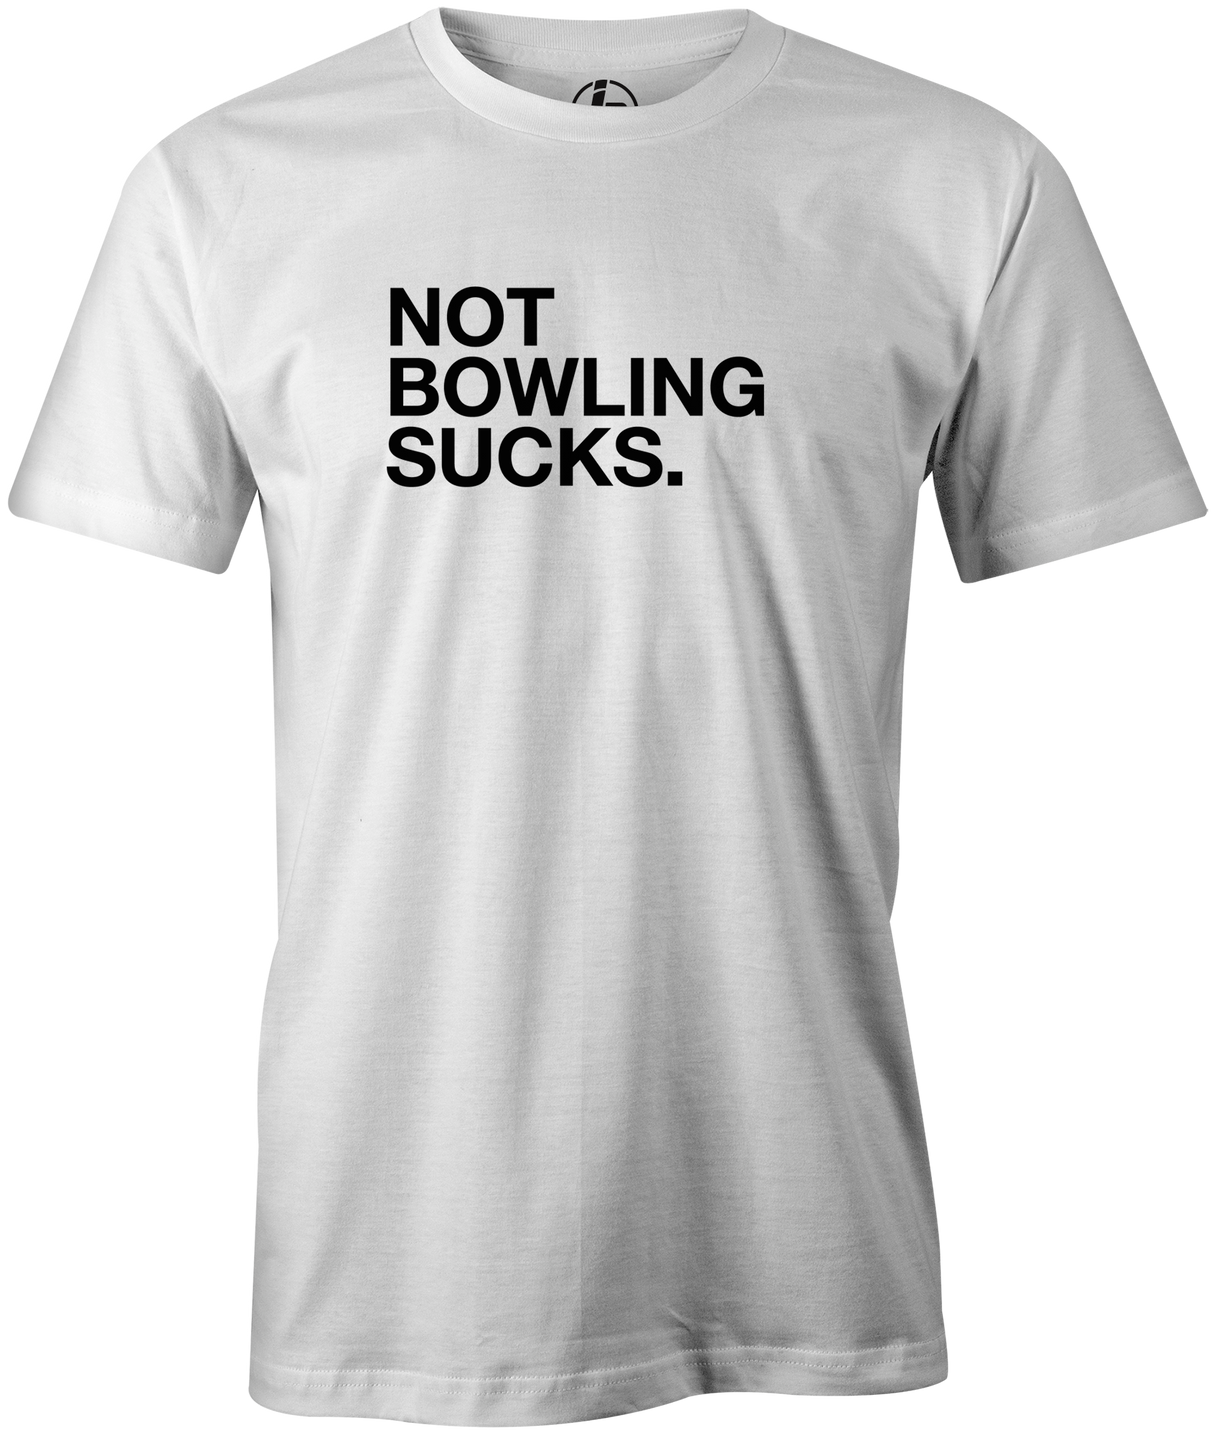 Not Bowling Sucks Men's T-Shirt, White, cool, funny, tshirt, tee, tee shirt, tee-shirt, league bowling, team bowling, ebonite, hammer, track, columbia 300, storm, roto grip, brunswick, radical, dv8, motiv.